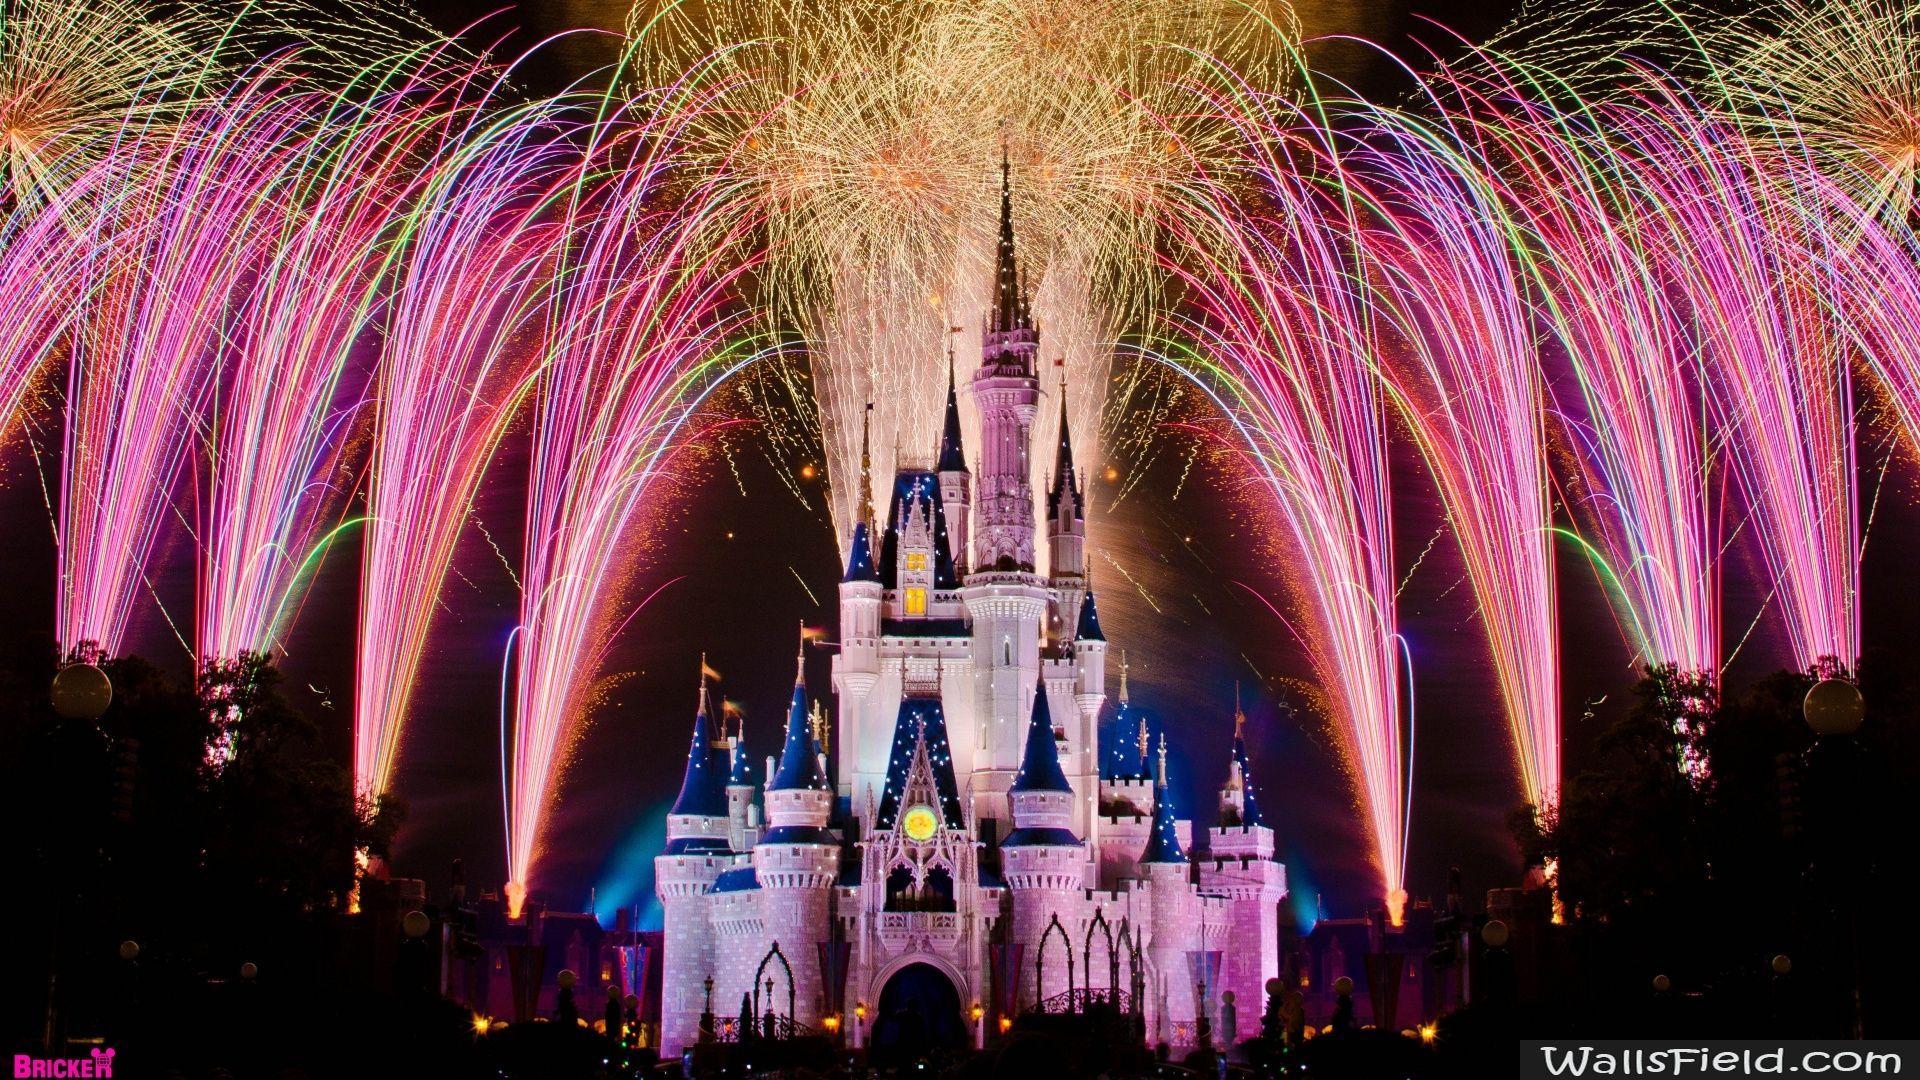 Disney Fireworks Wallpapers Top Free Disney Fireworks Backgrounds